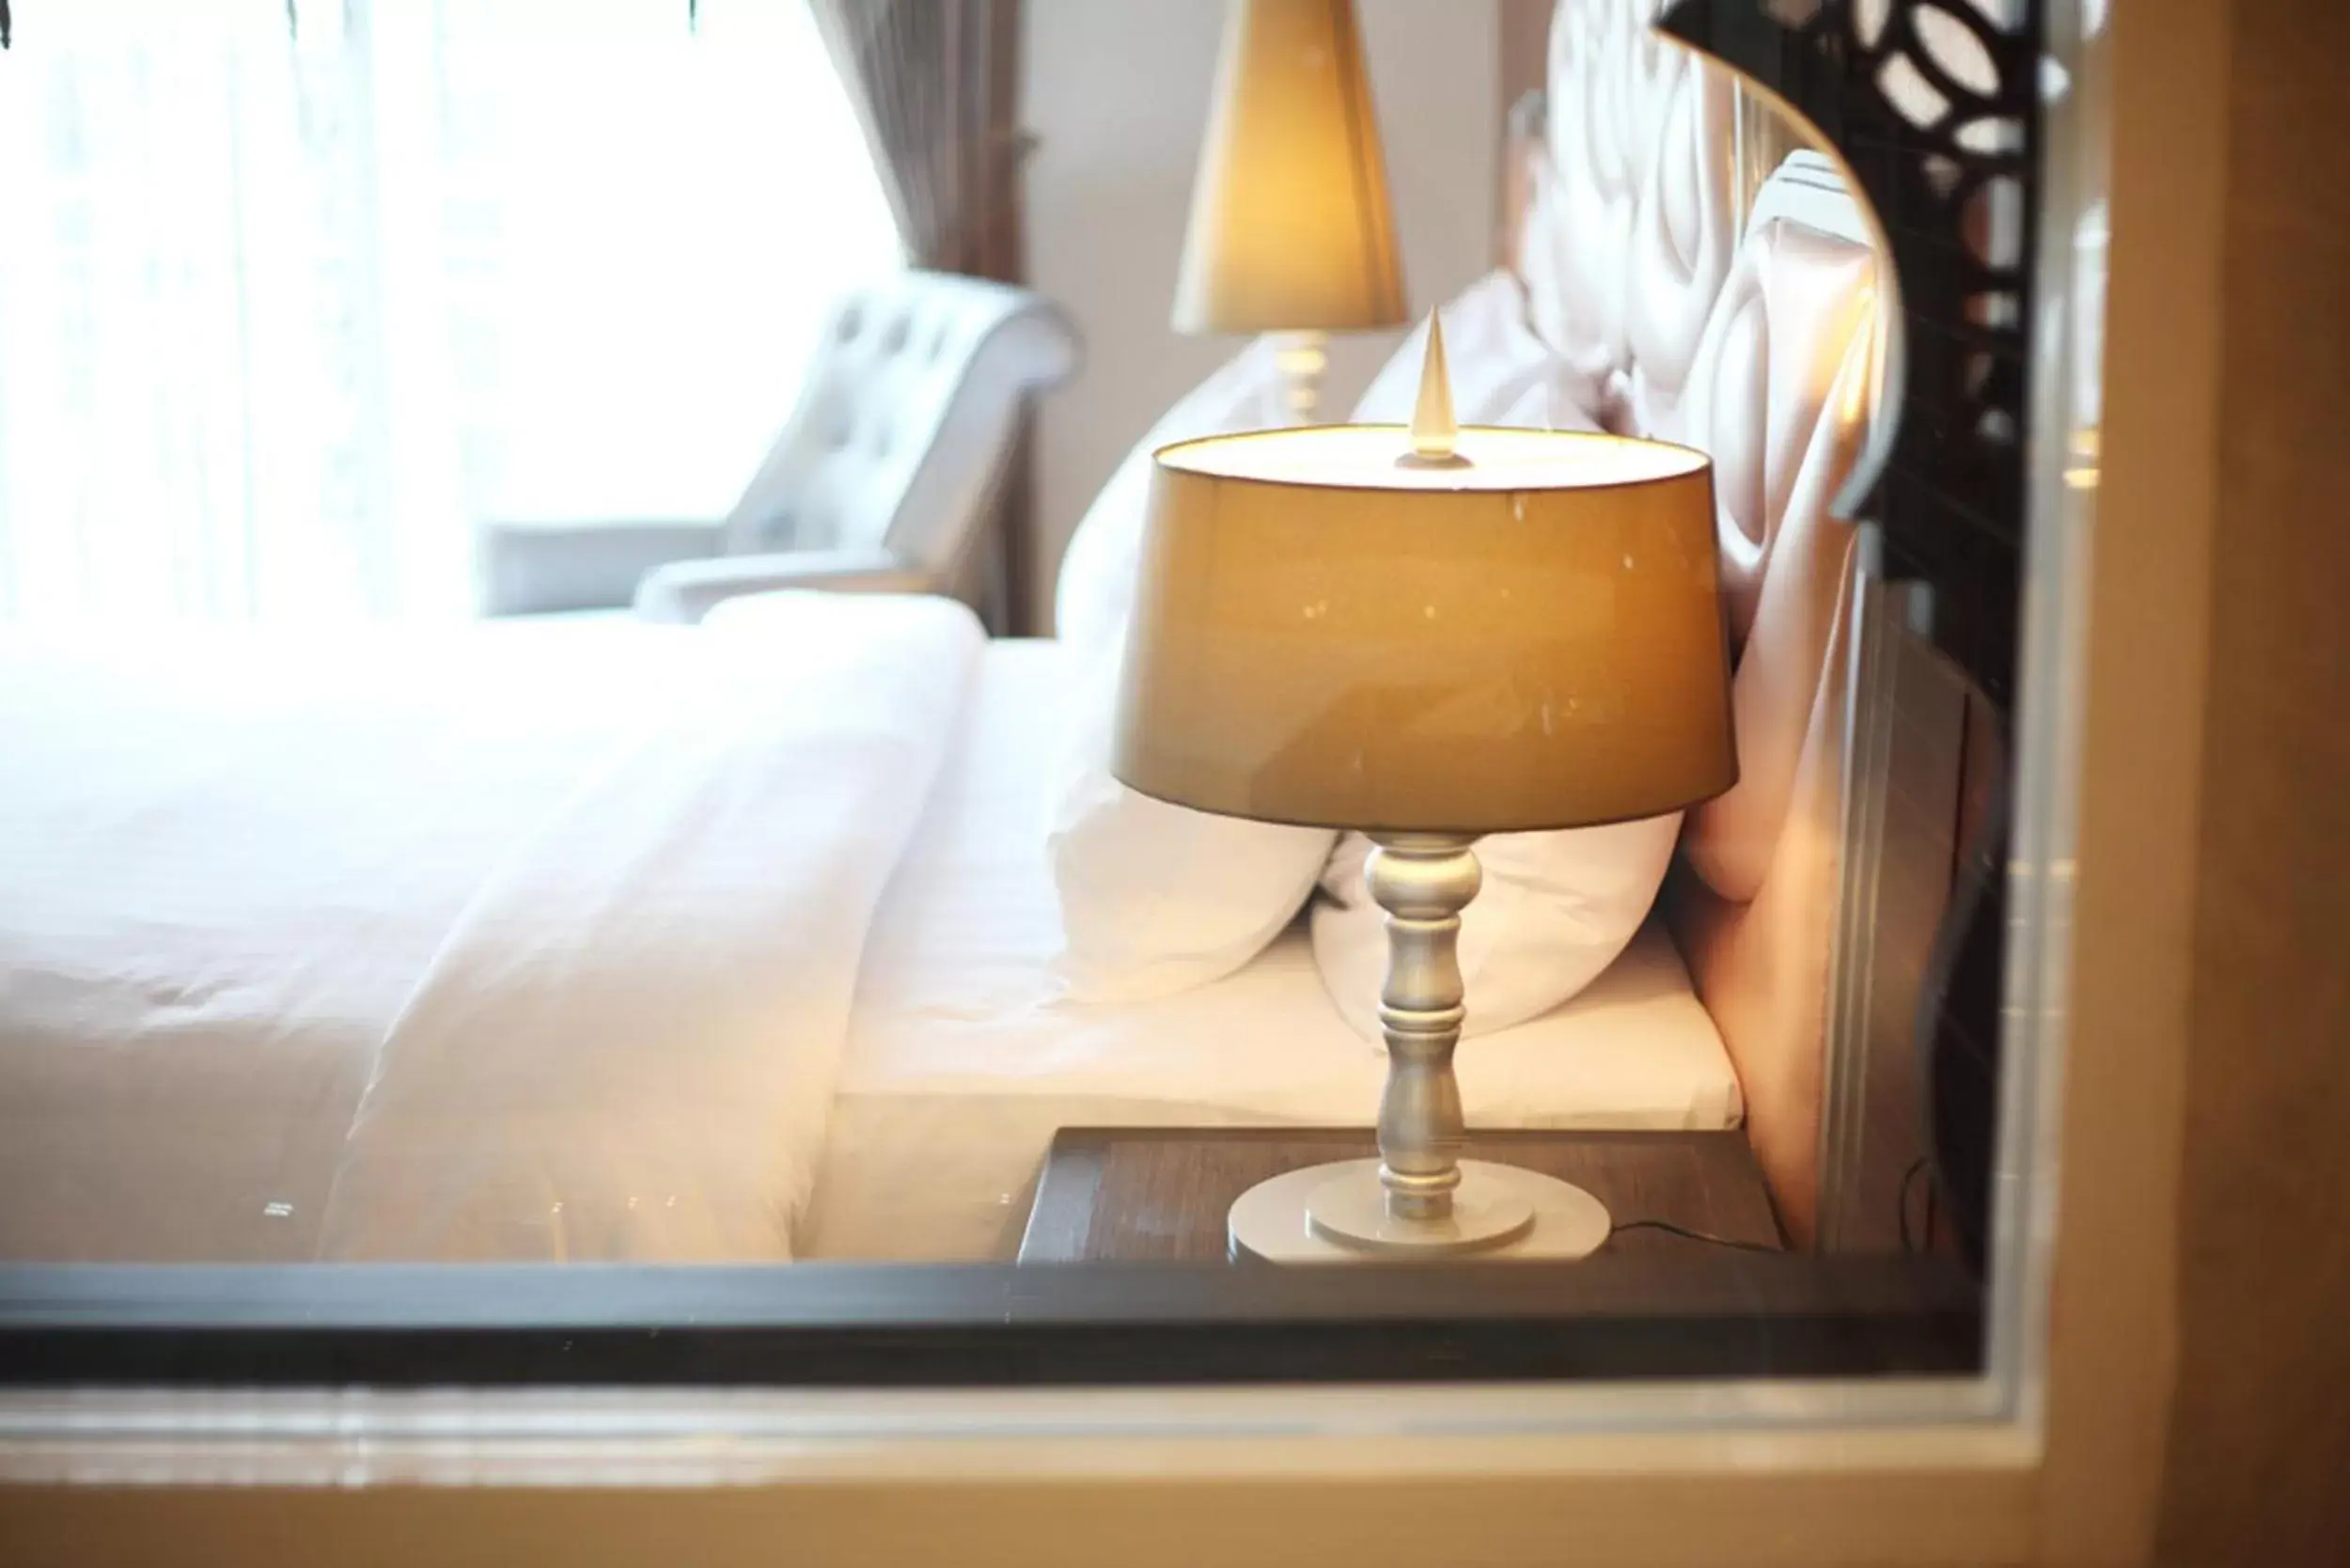 Bed in Chillax Resort - SHA Extra Plus